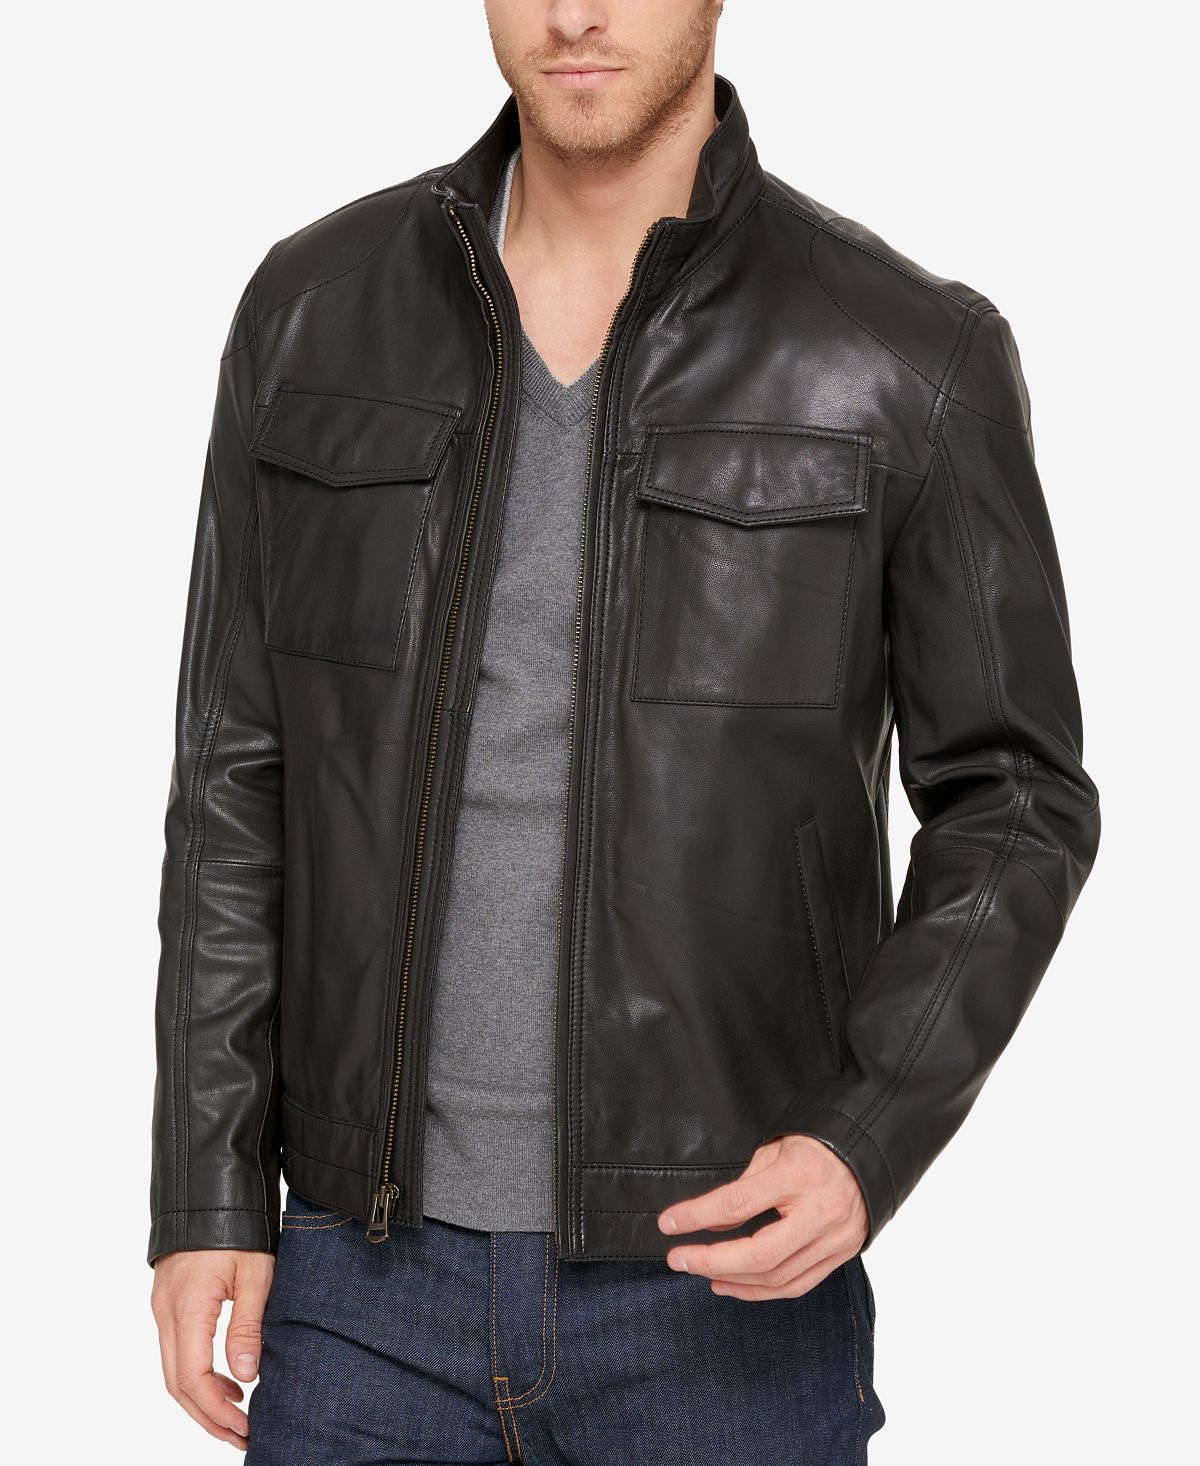 Cole Haan Leather Trucker Jacket Black